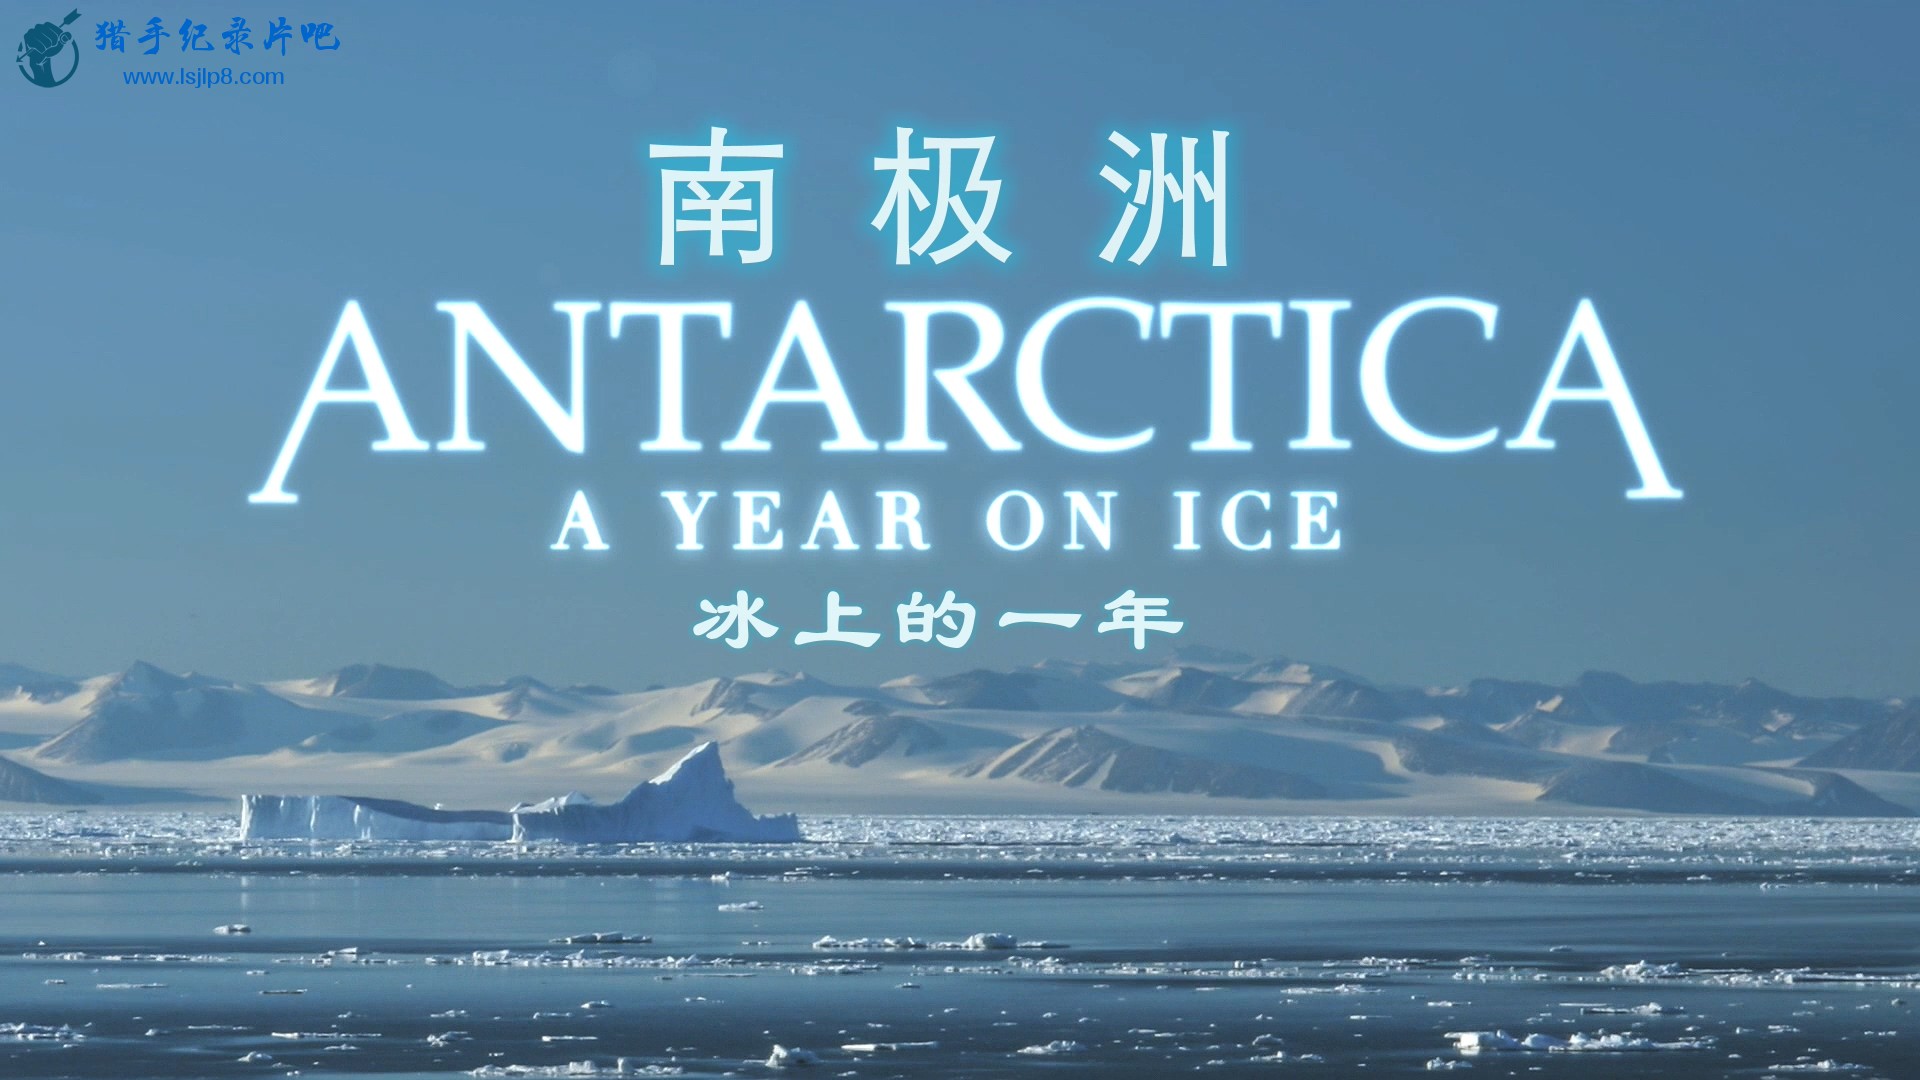 Antarctica.A.Year.on.Ice.2013.1080p.BluRay.x264.DTS-WiKi.mkv_20200320_104618.935.jpg